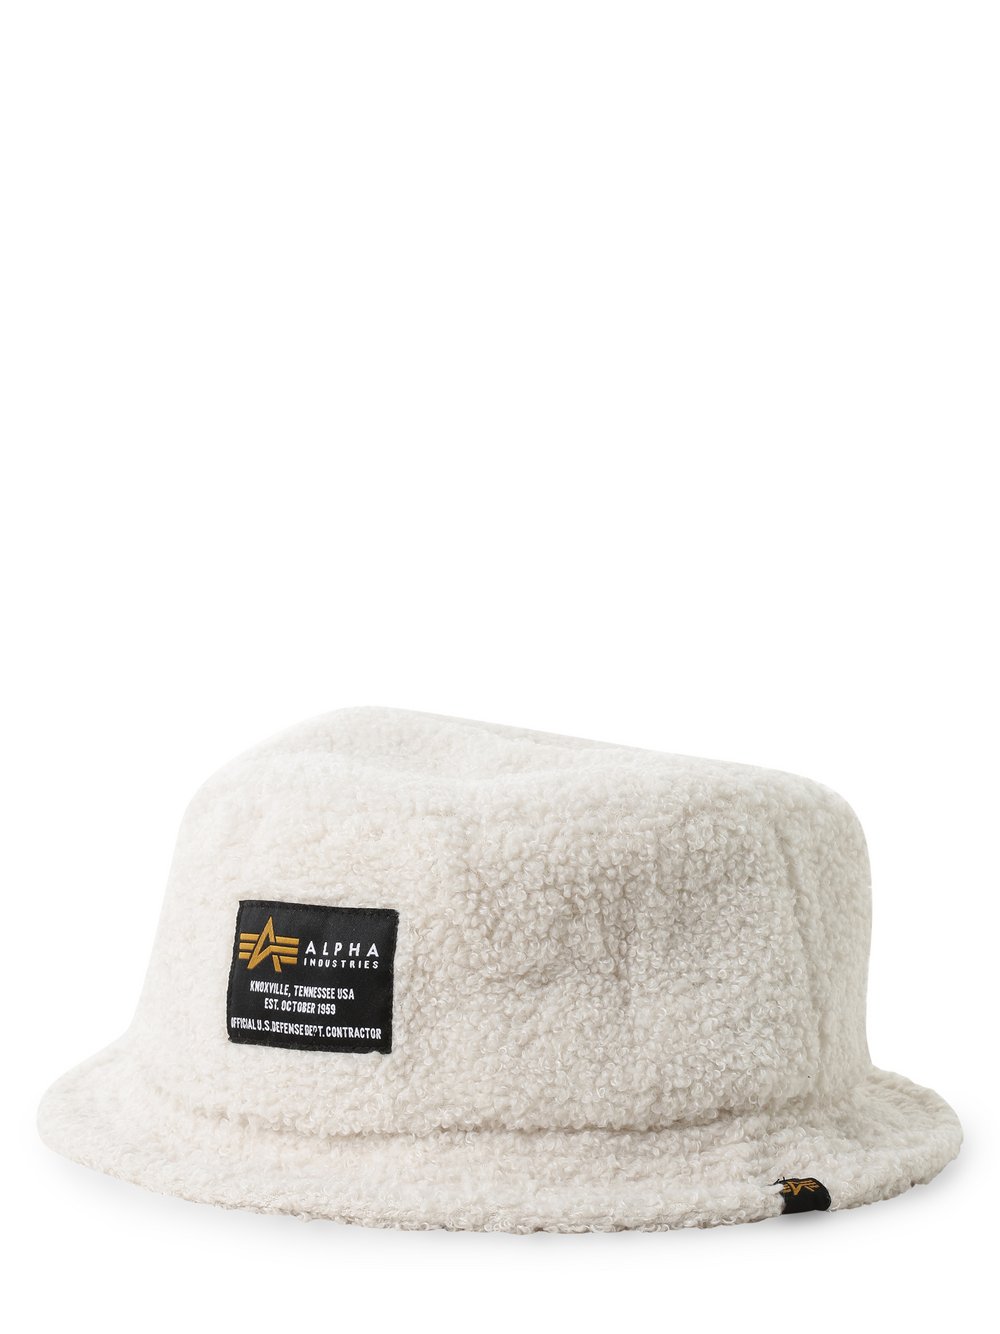 Alpha Industries - Damski bucket hat, biały